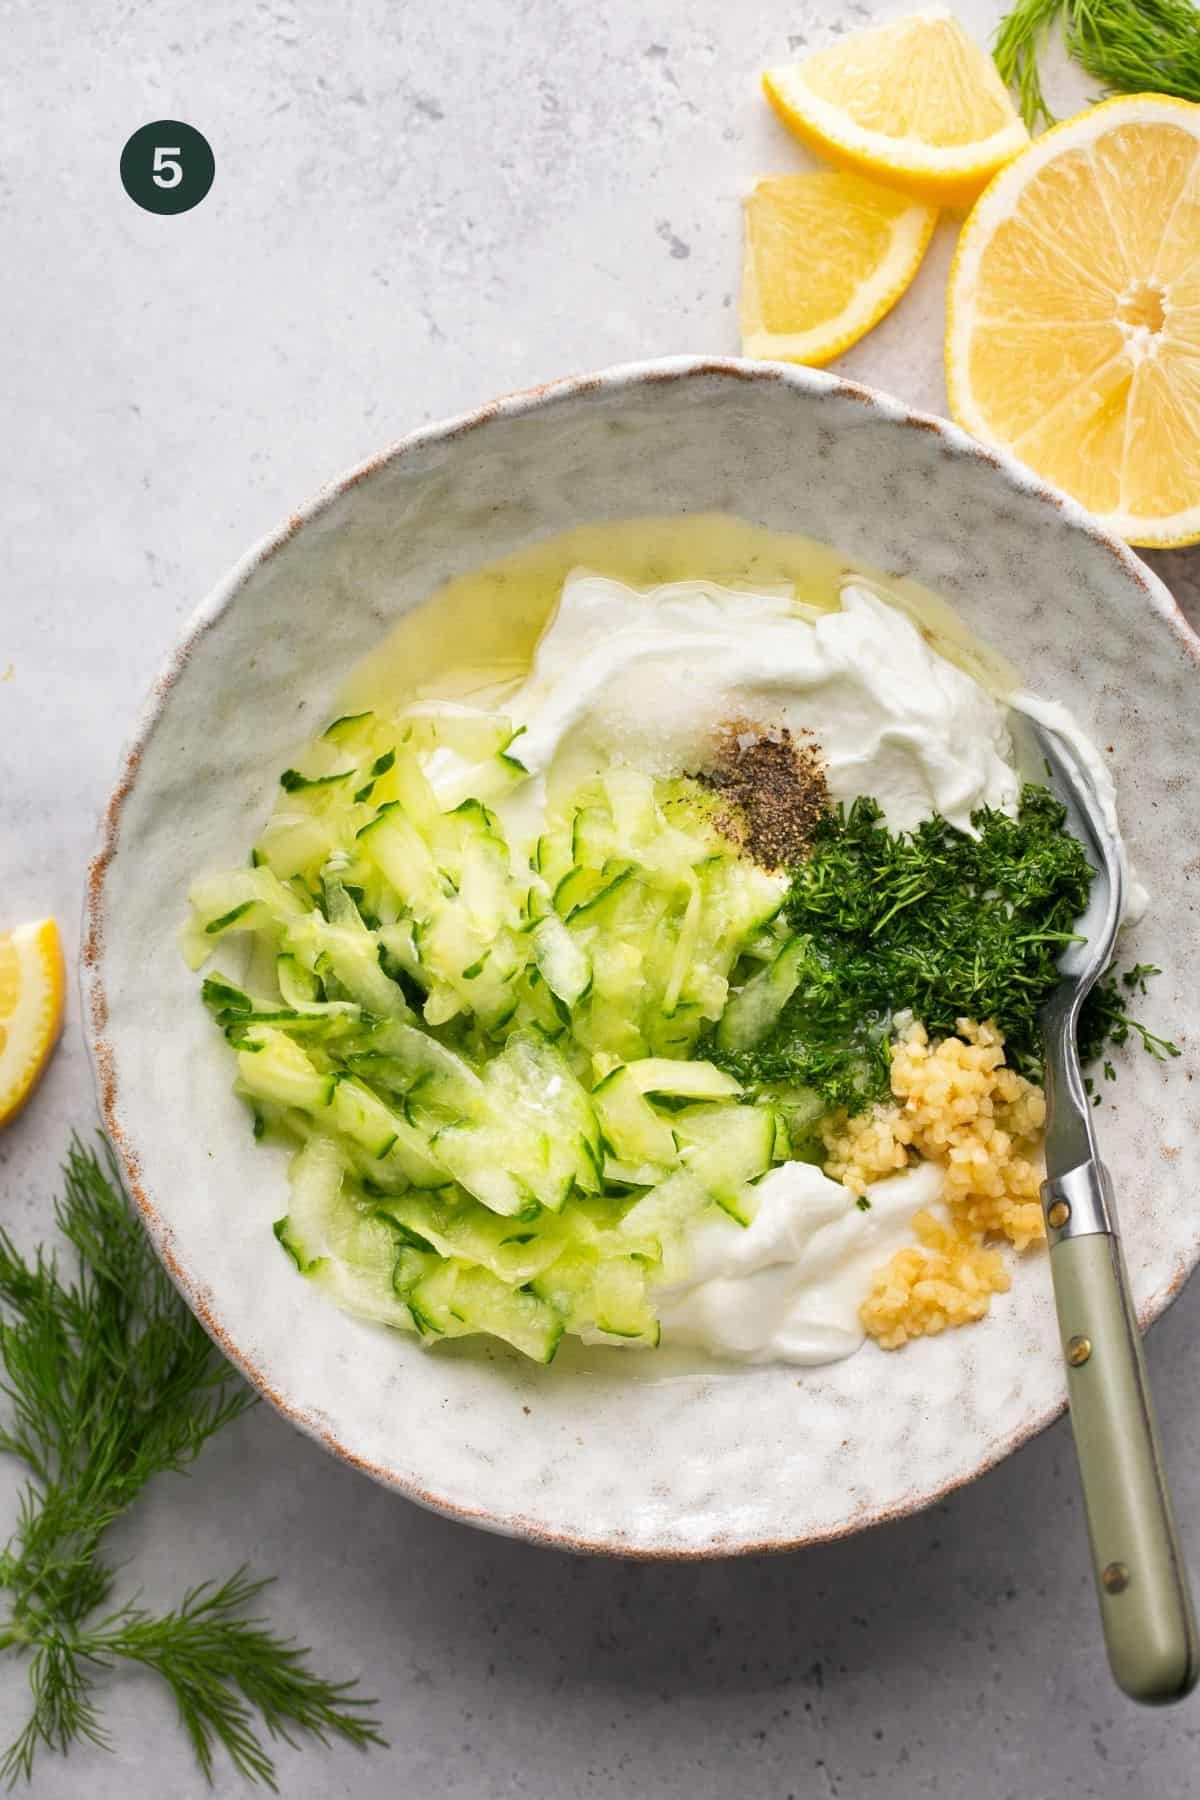 Cucumber, lemon, dill, yogurt and seasonings in a bowl. 